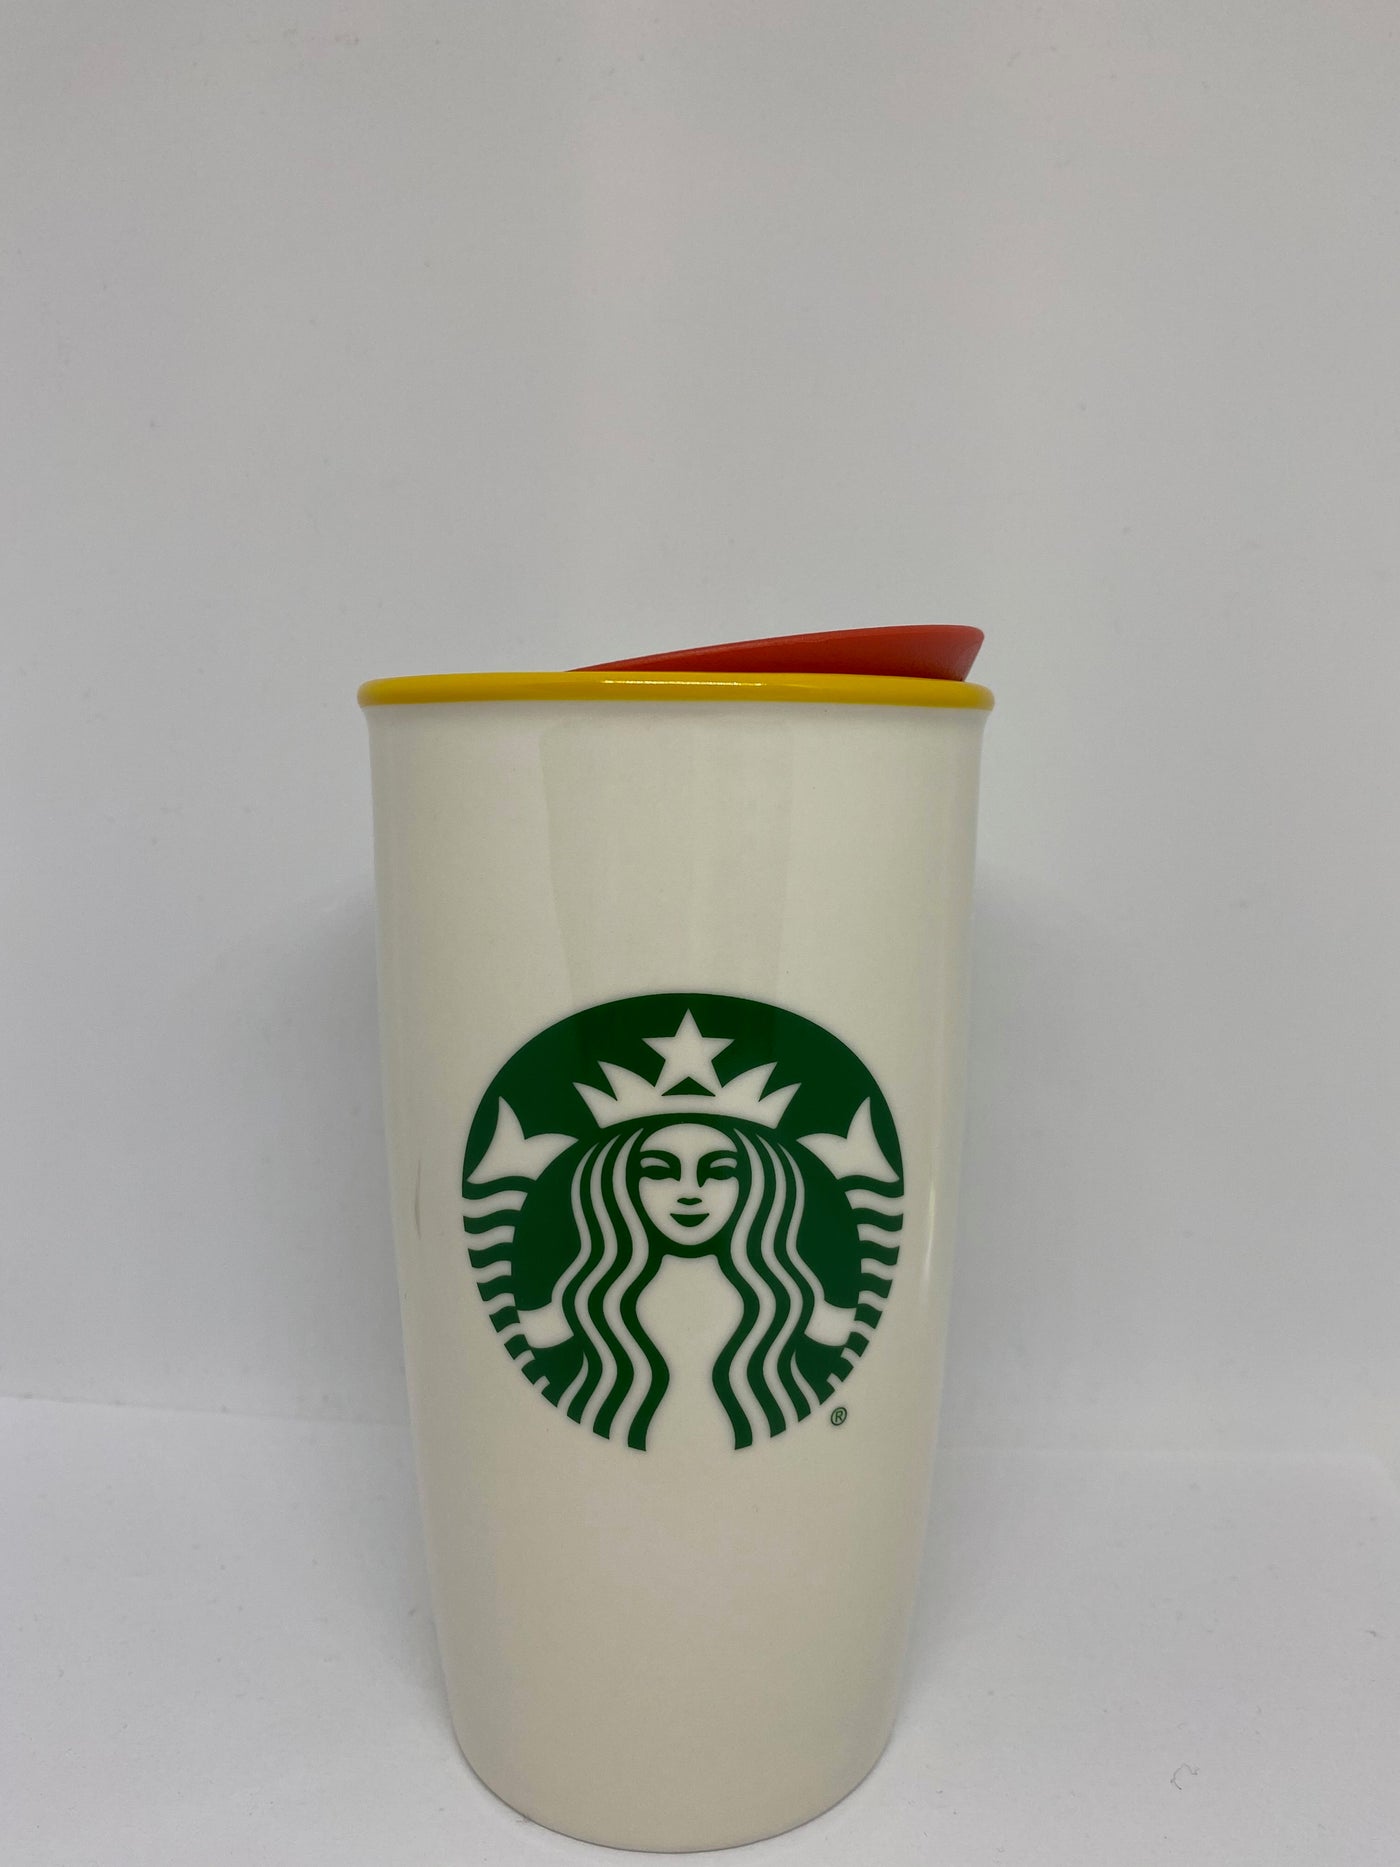 Disney Starbucks Hollywood Studios Icons and Attractions Coffee Tumbler Mug New